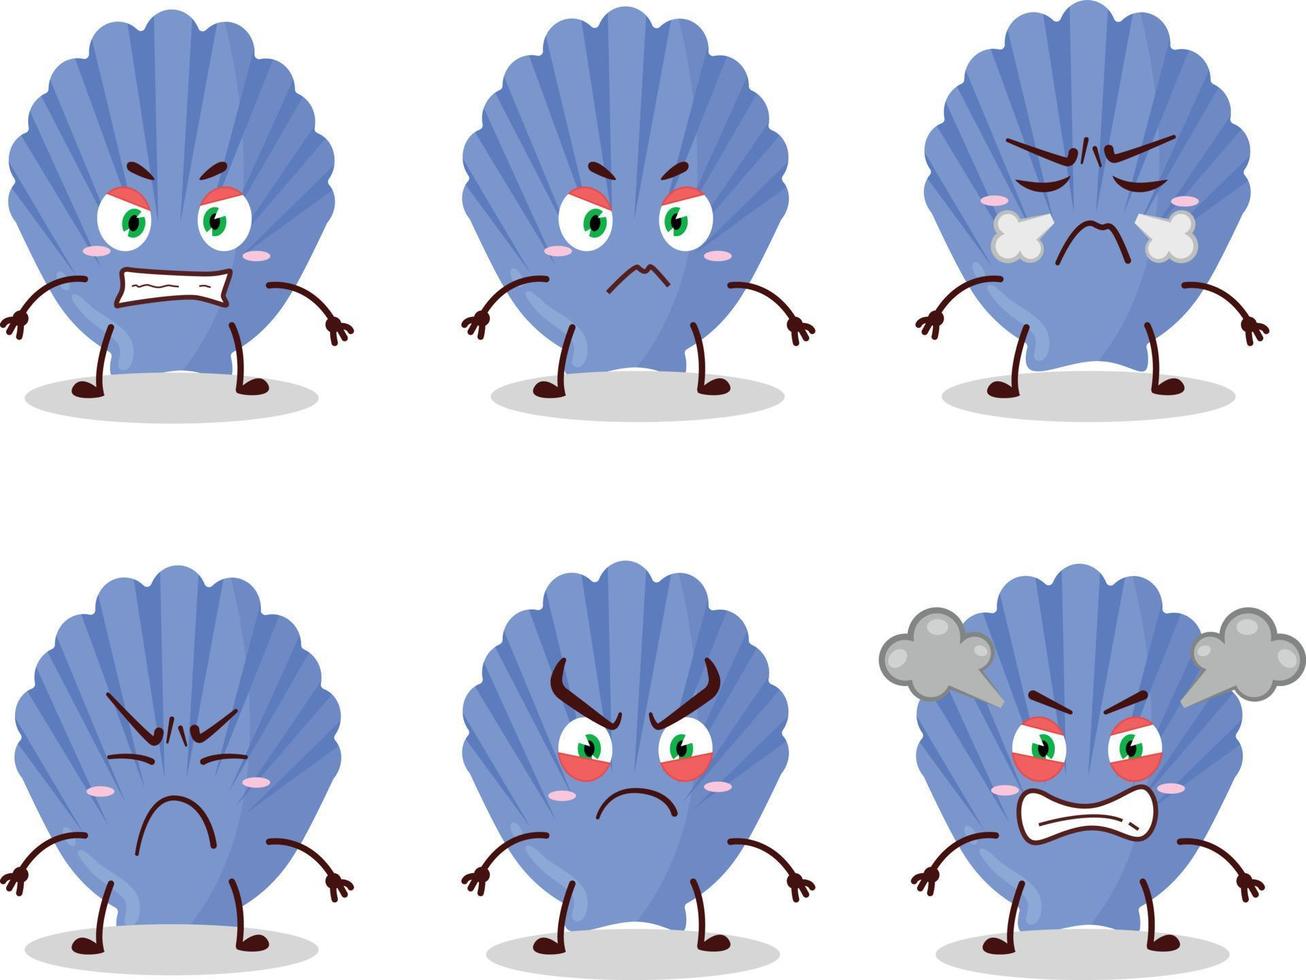 blå skal tecknad serie karaktär med olika arg uttryck vektor